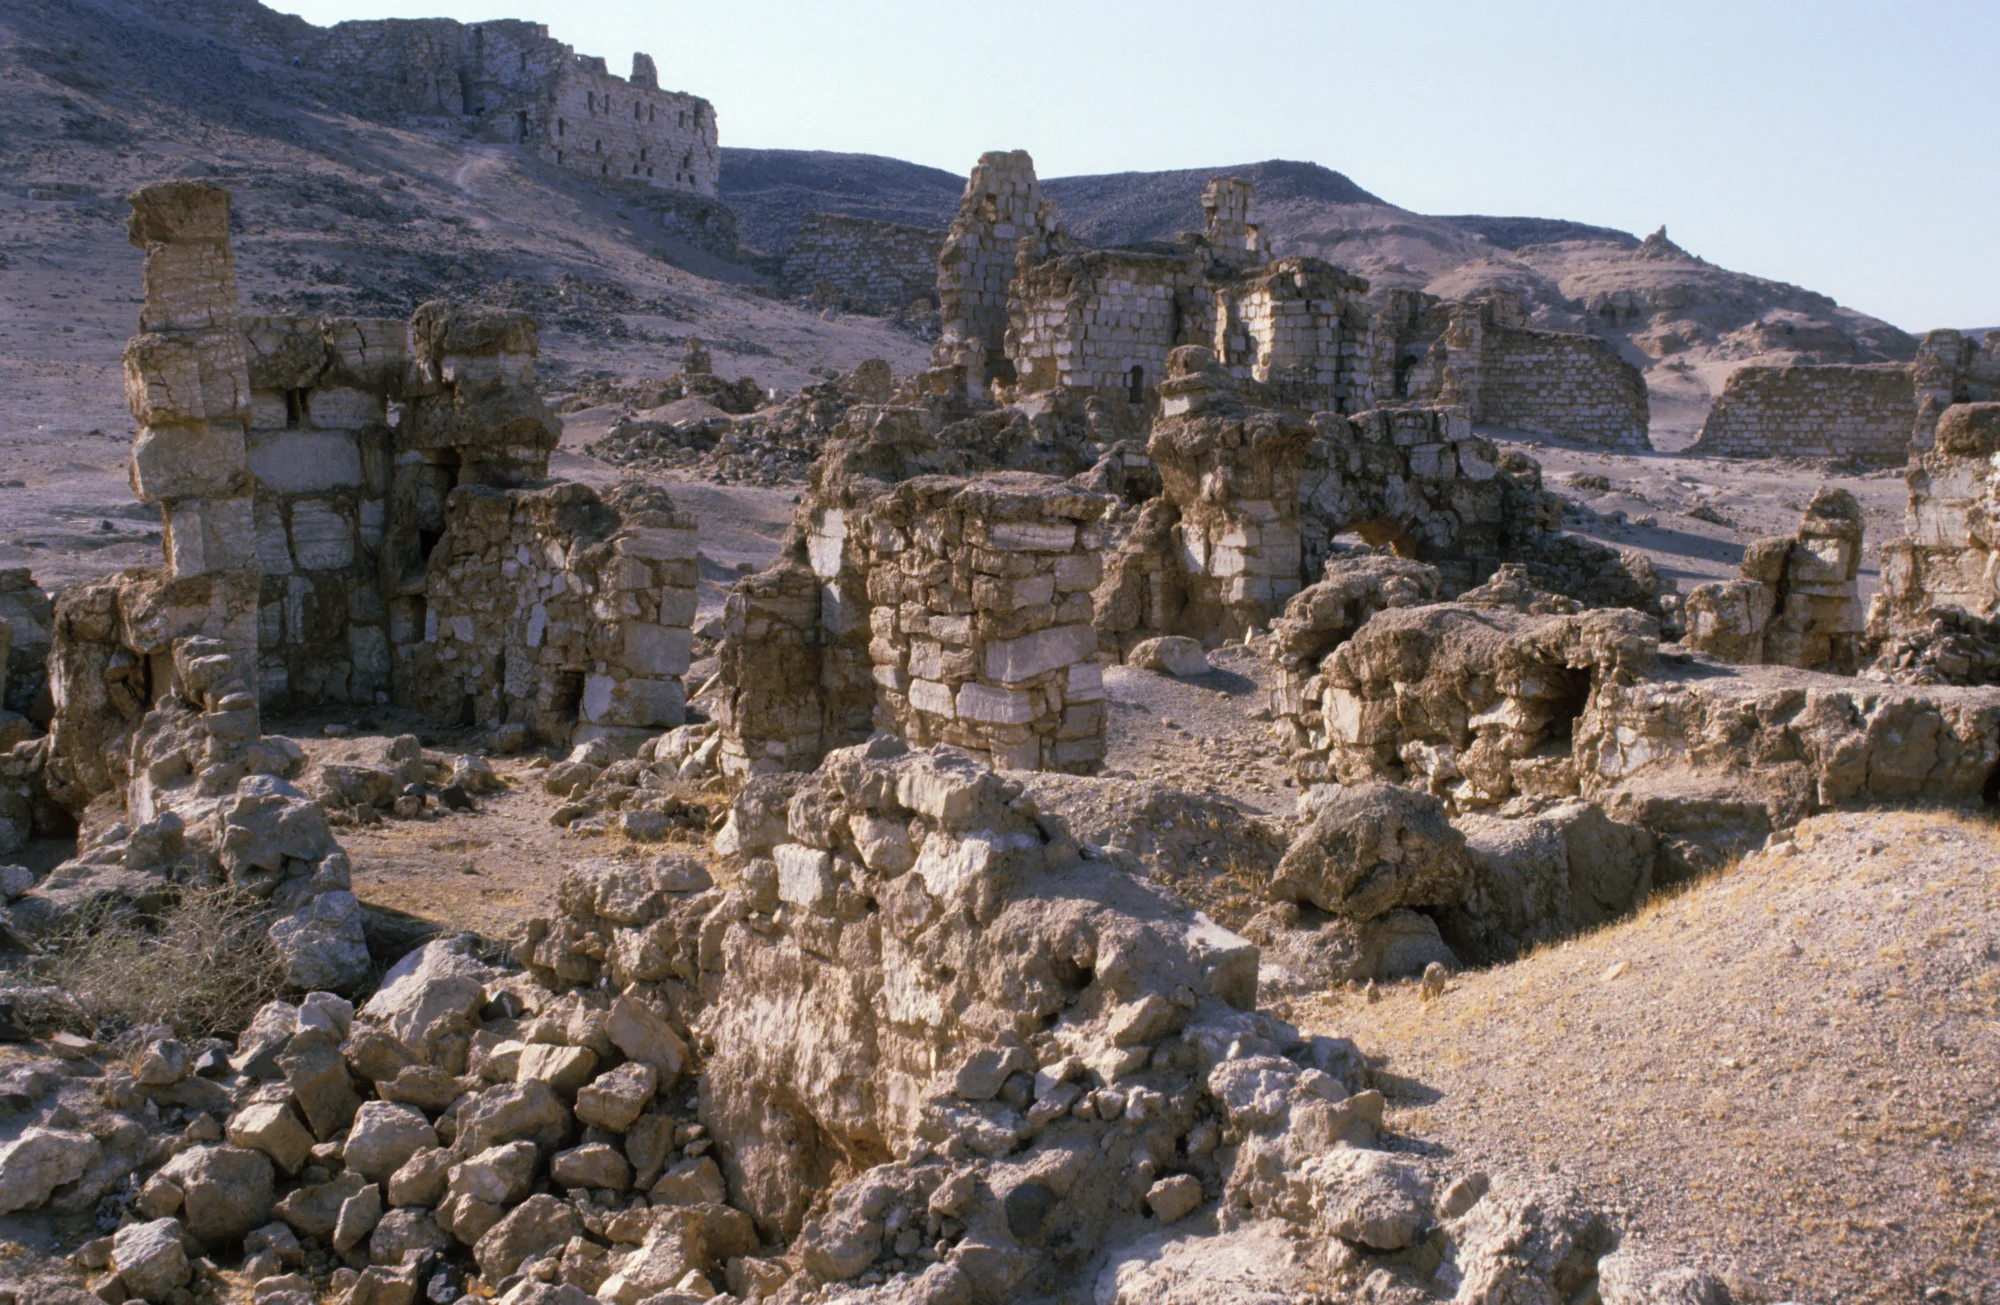 General view of Halabiyya ruins